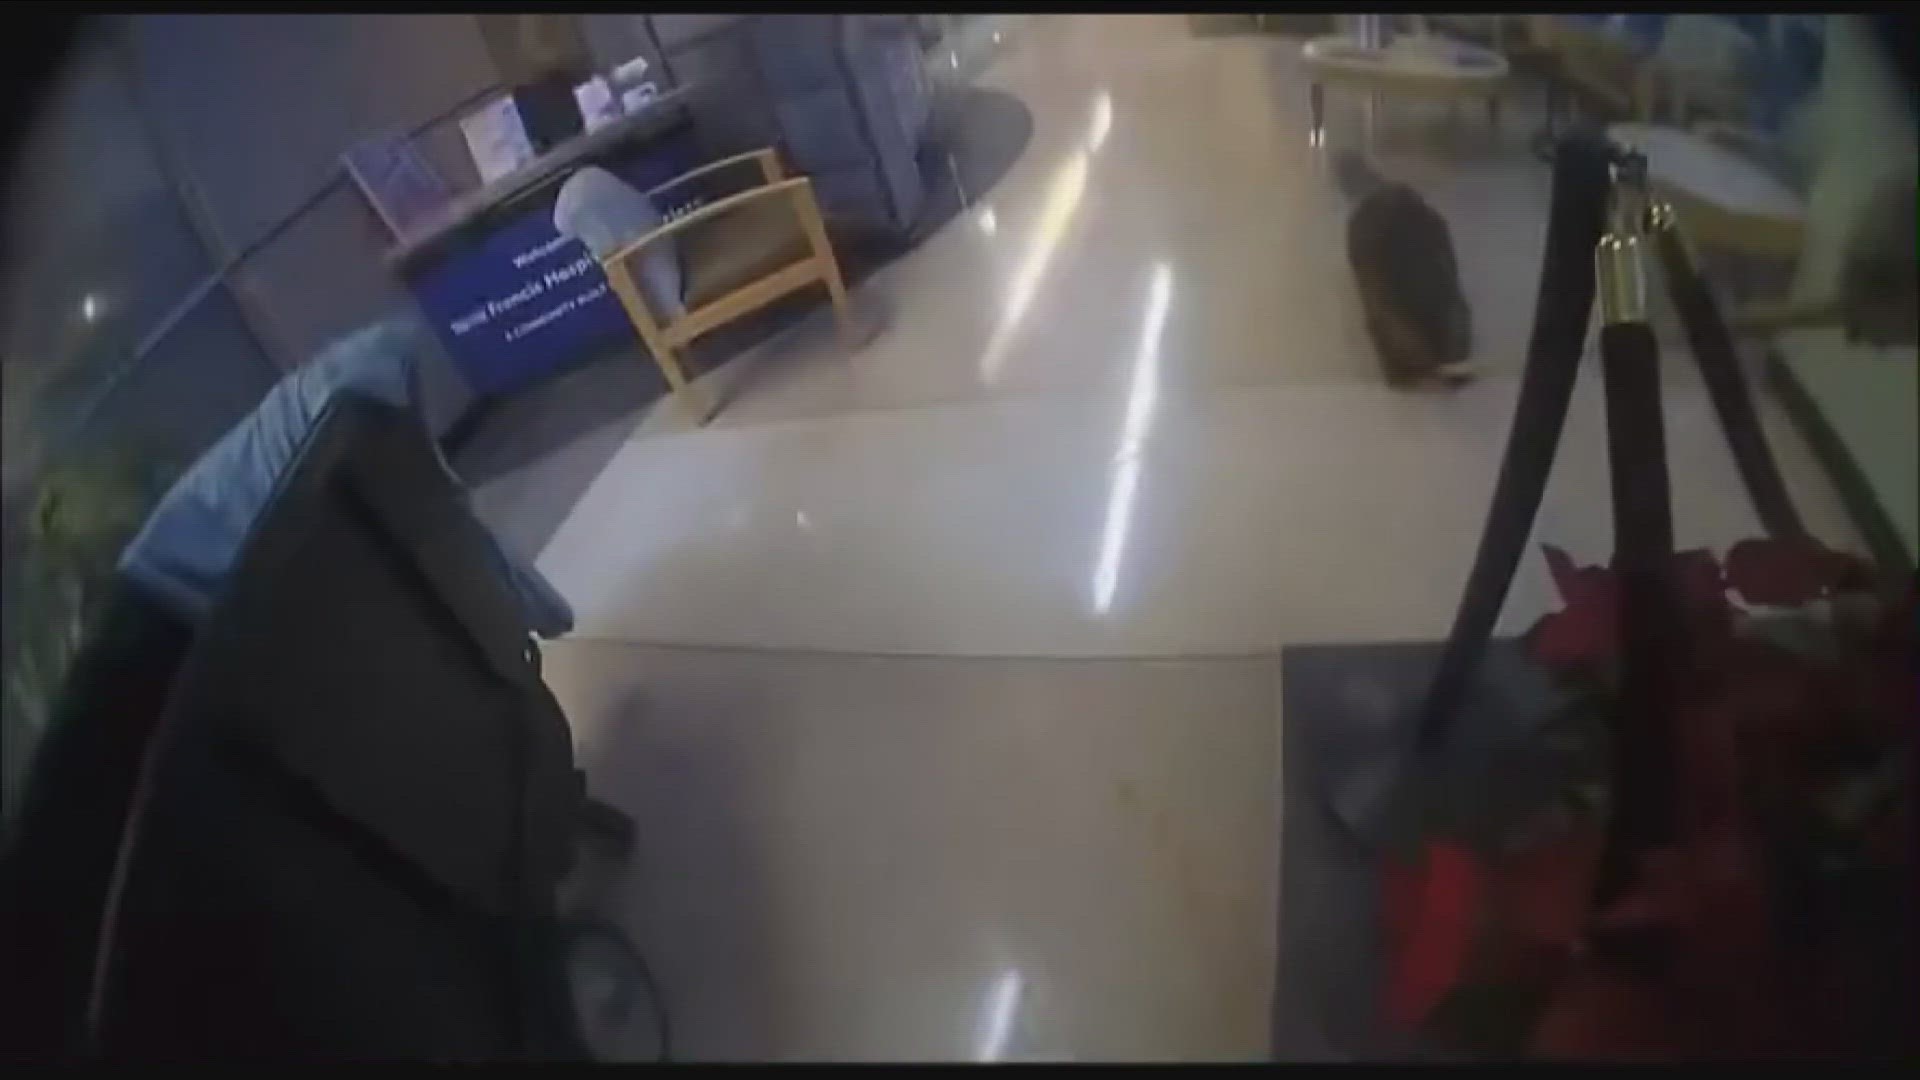 On Christmas morning, Bartlett Police received a call regarding a beaver roaming around inside of Saint Francis Hospital.